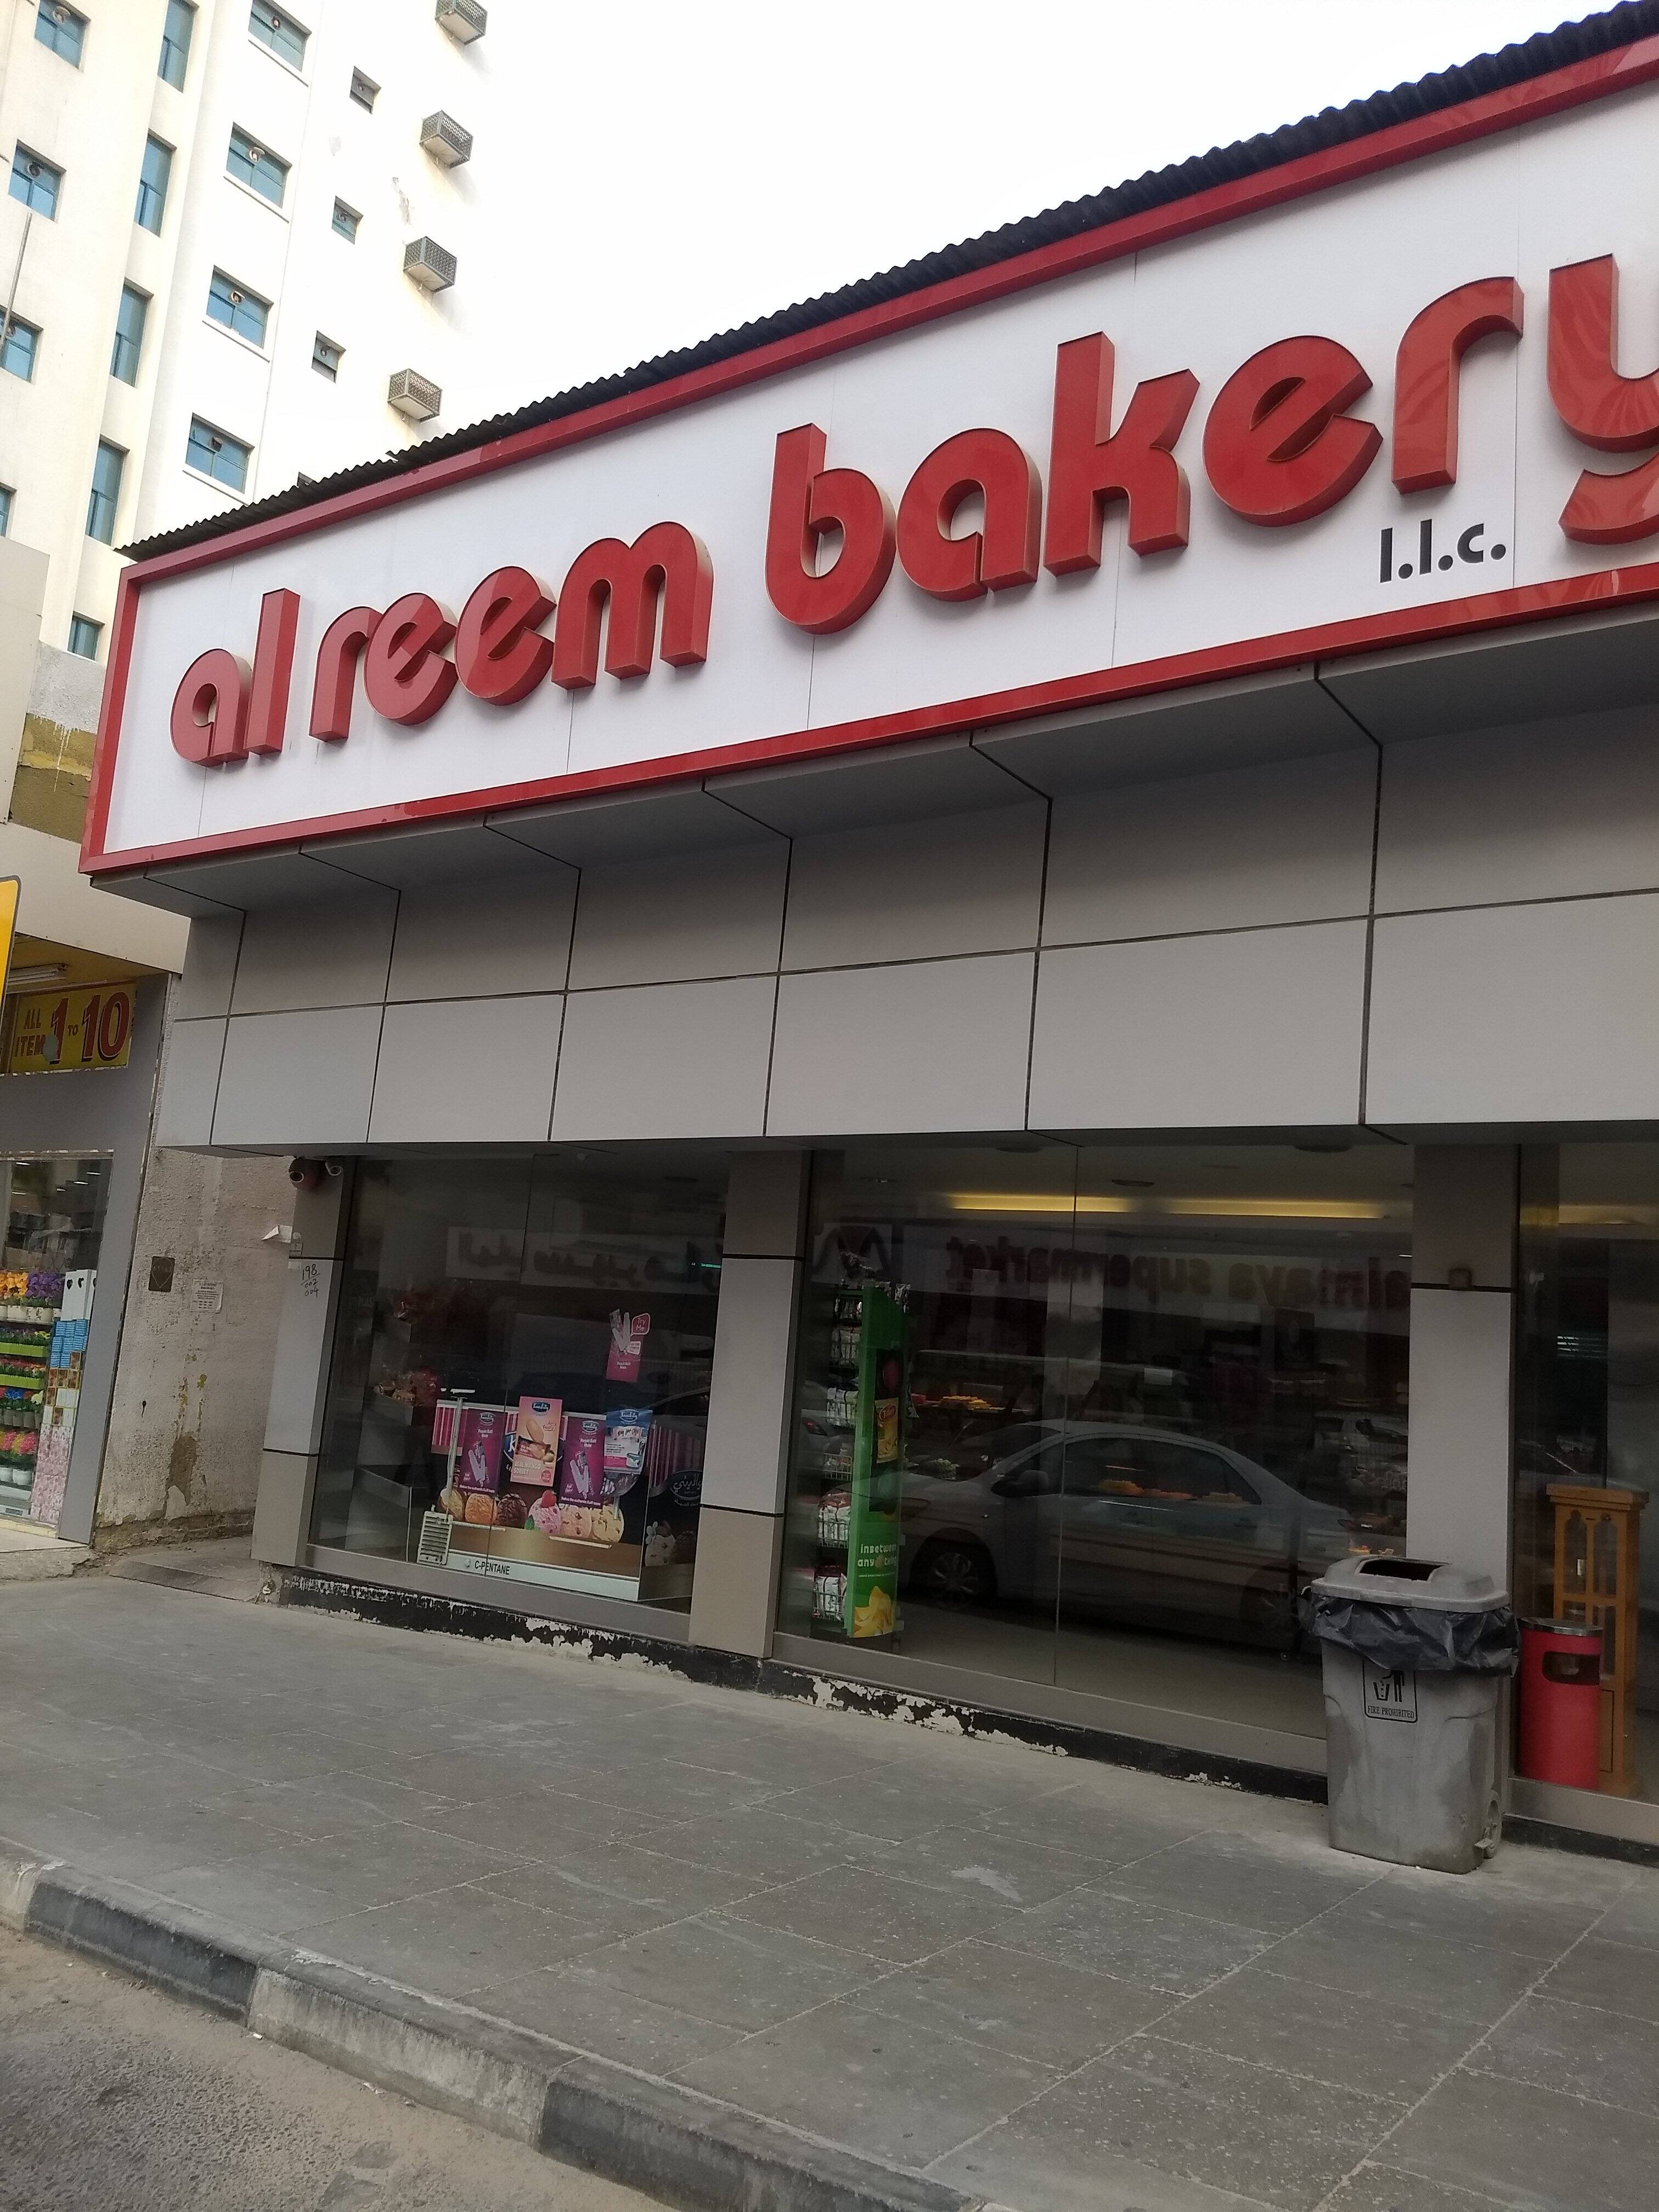 photos-of-al-reem-bakery-pictures-of-al-reem-bakery-sharjah-zomato